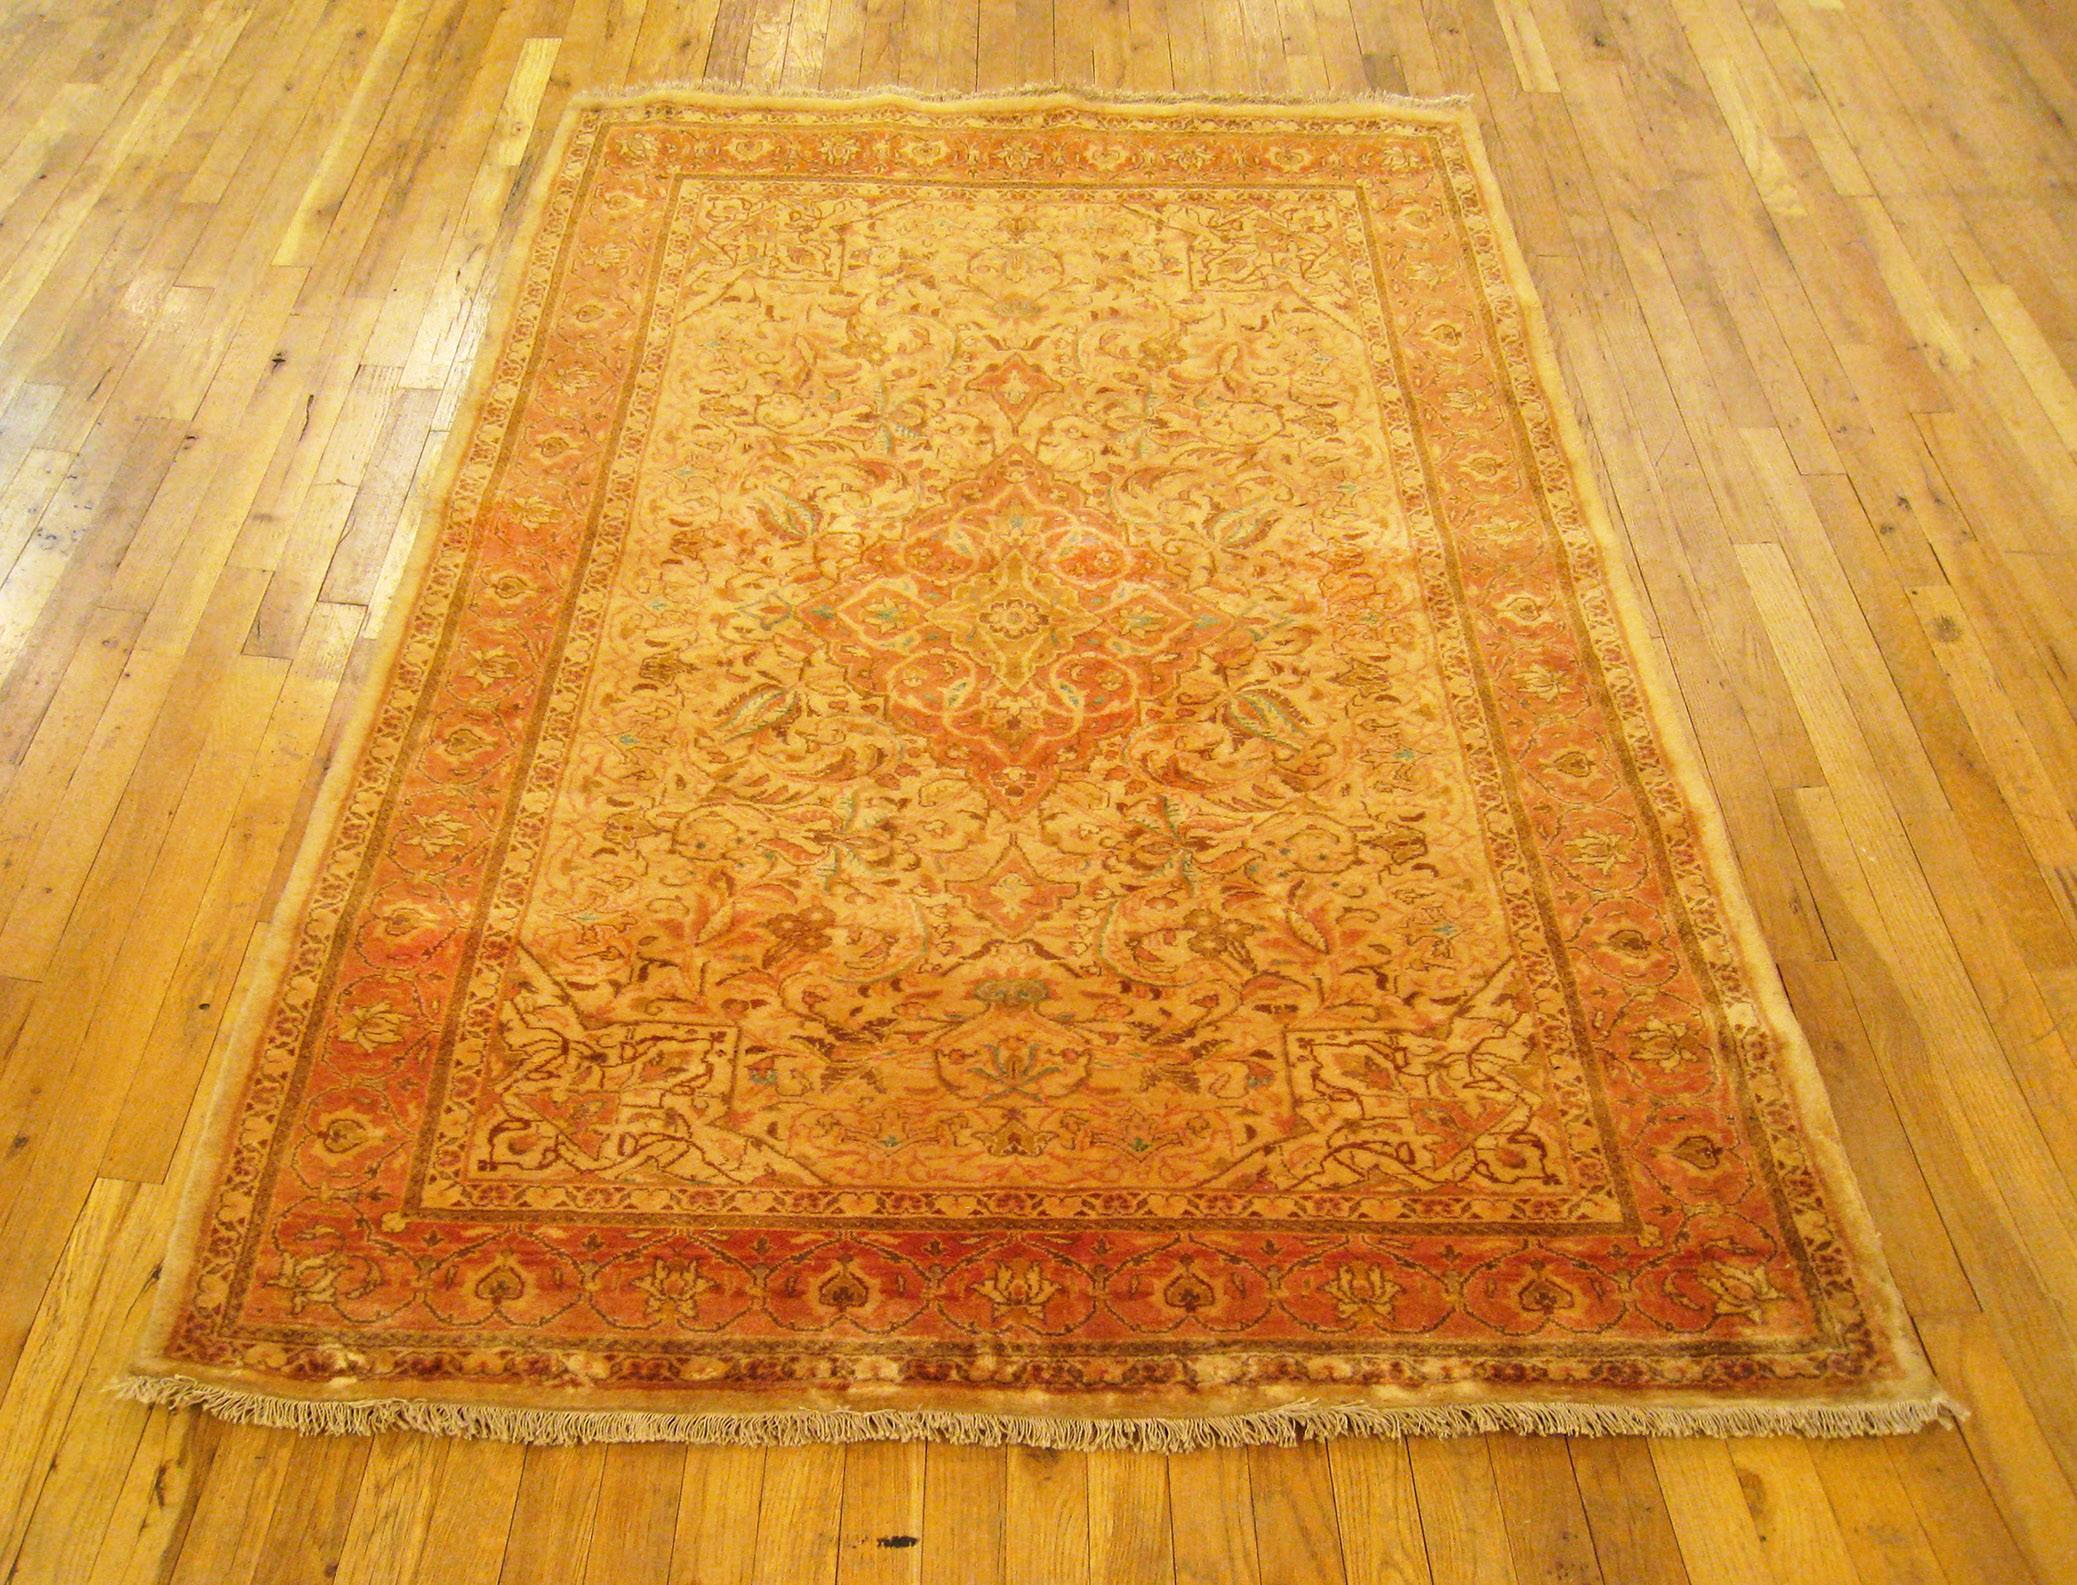 Vintage Persian Sarouk Oriental Rug, circa 1945, Small size

A vintage Persian Sarouk oriental rug, size 6'8